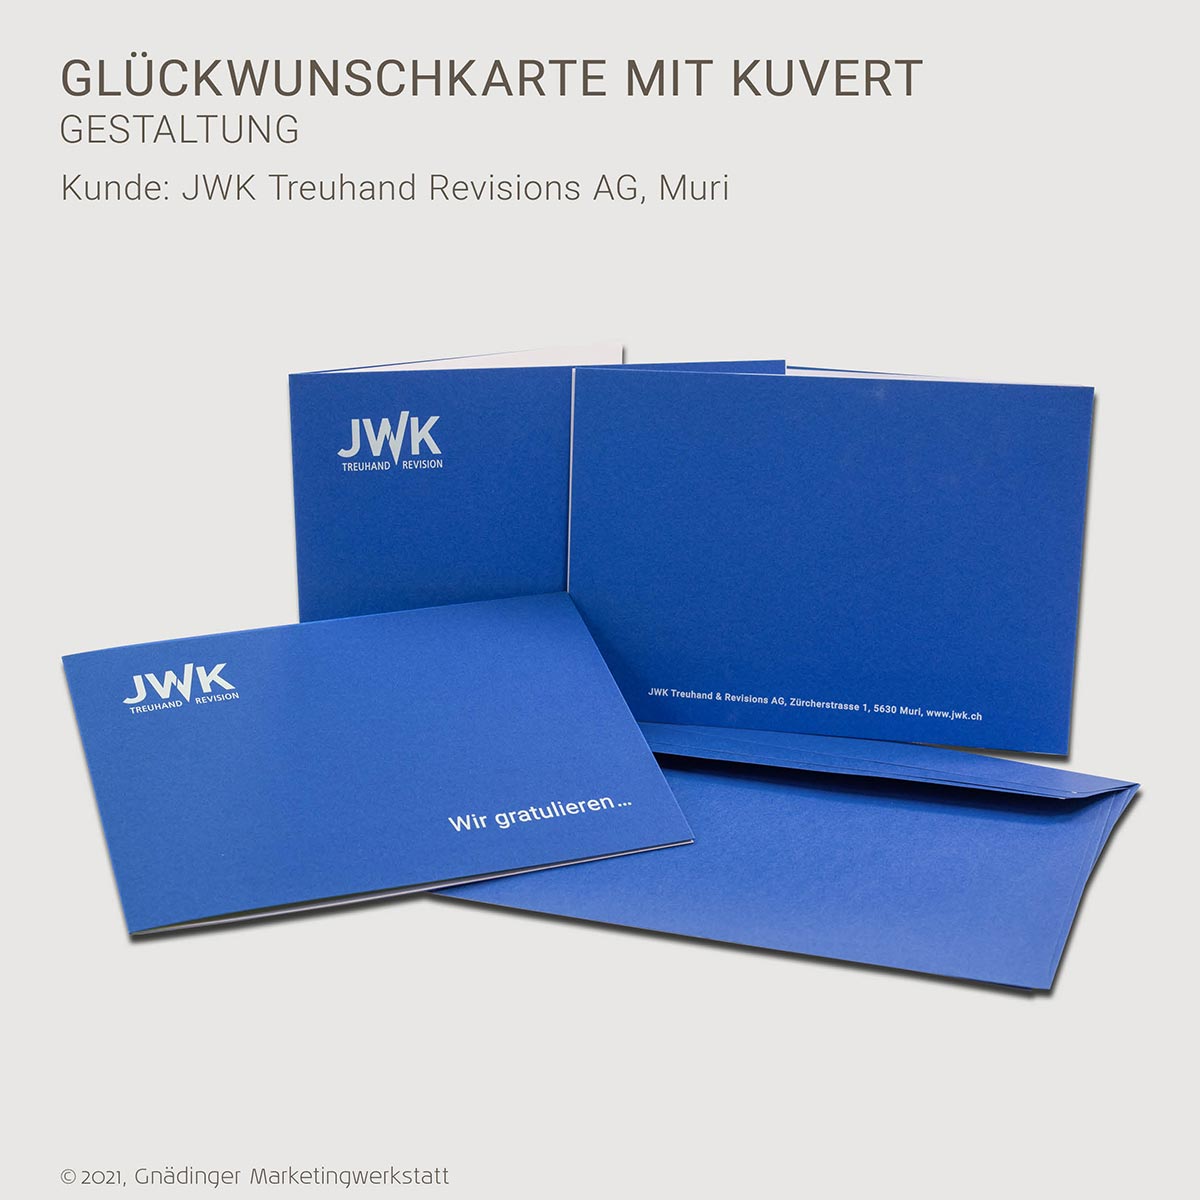 WEB1_GMW_Projekt_JWK-Treuhand_Glueckwunschkarte_10-2021